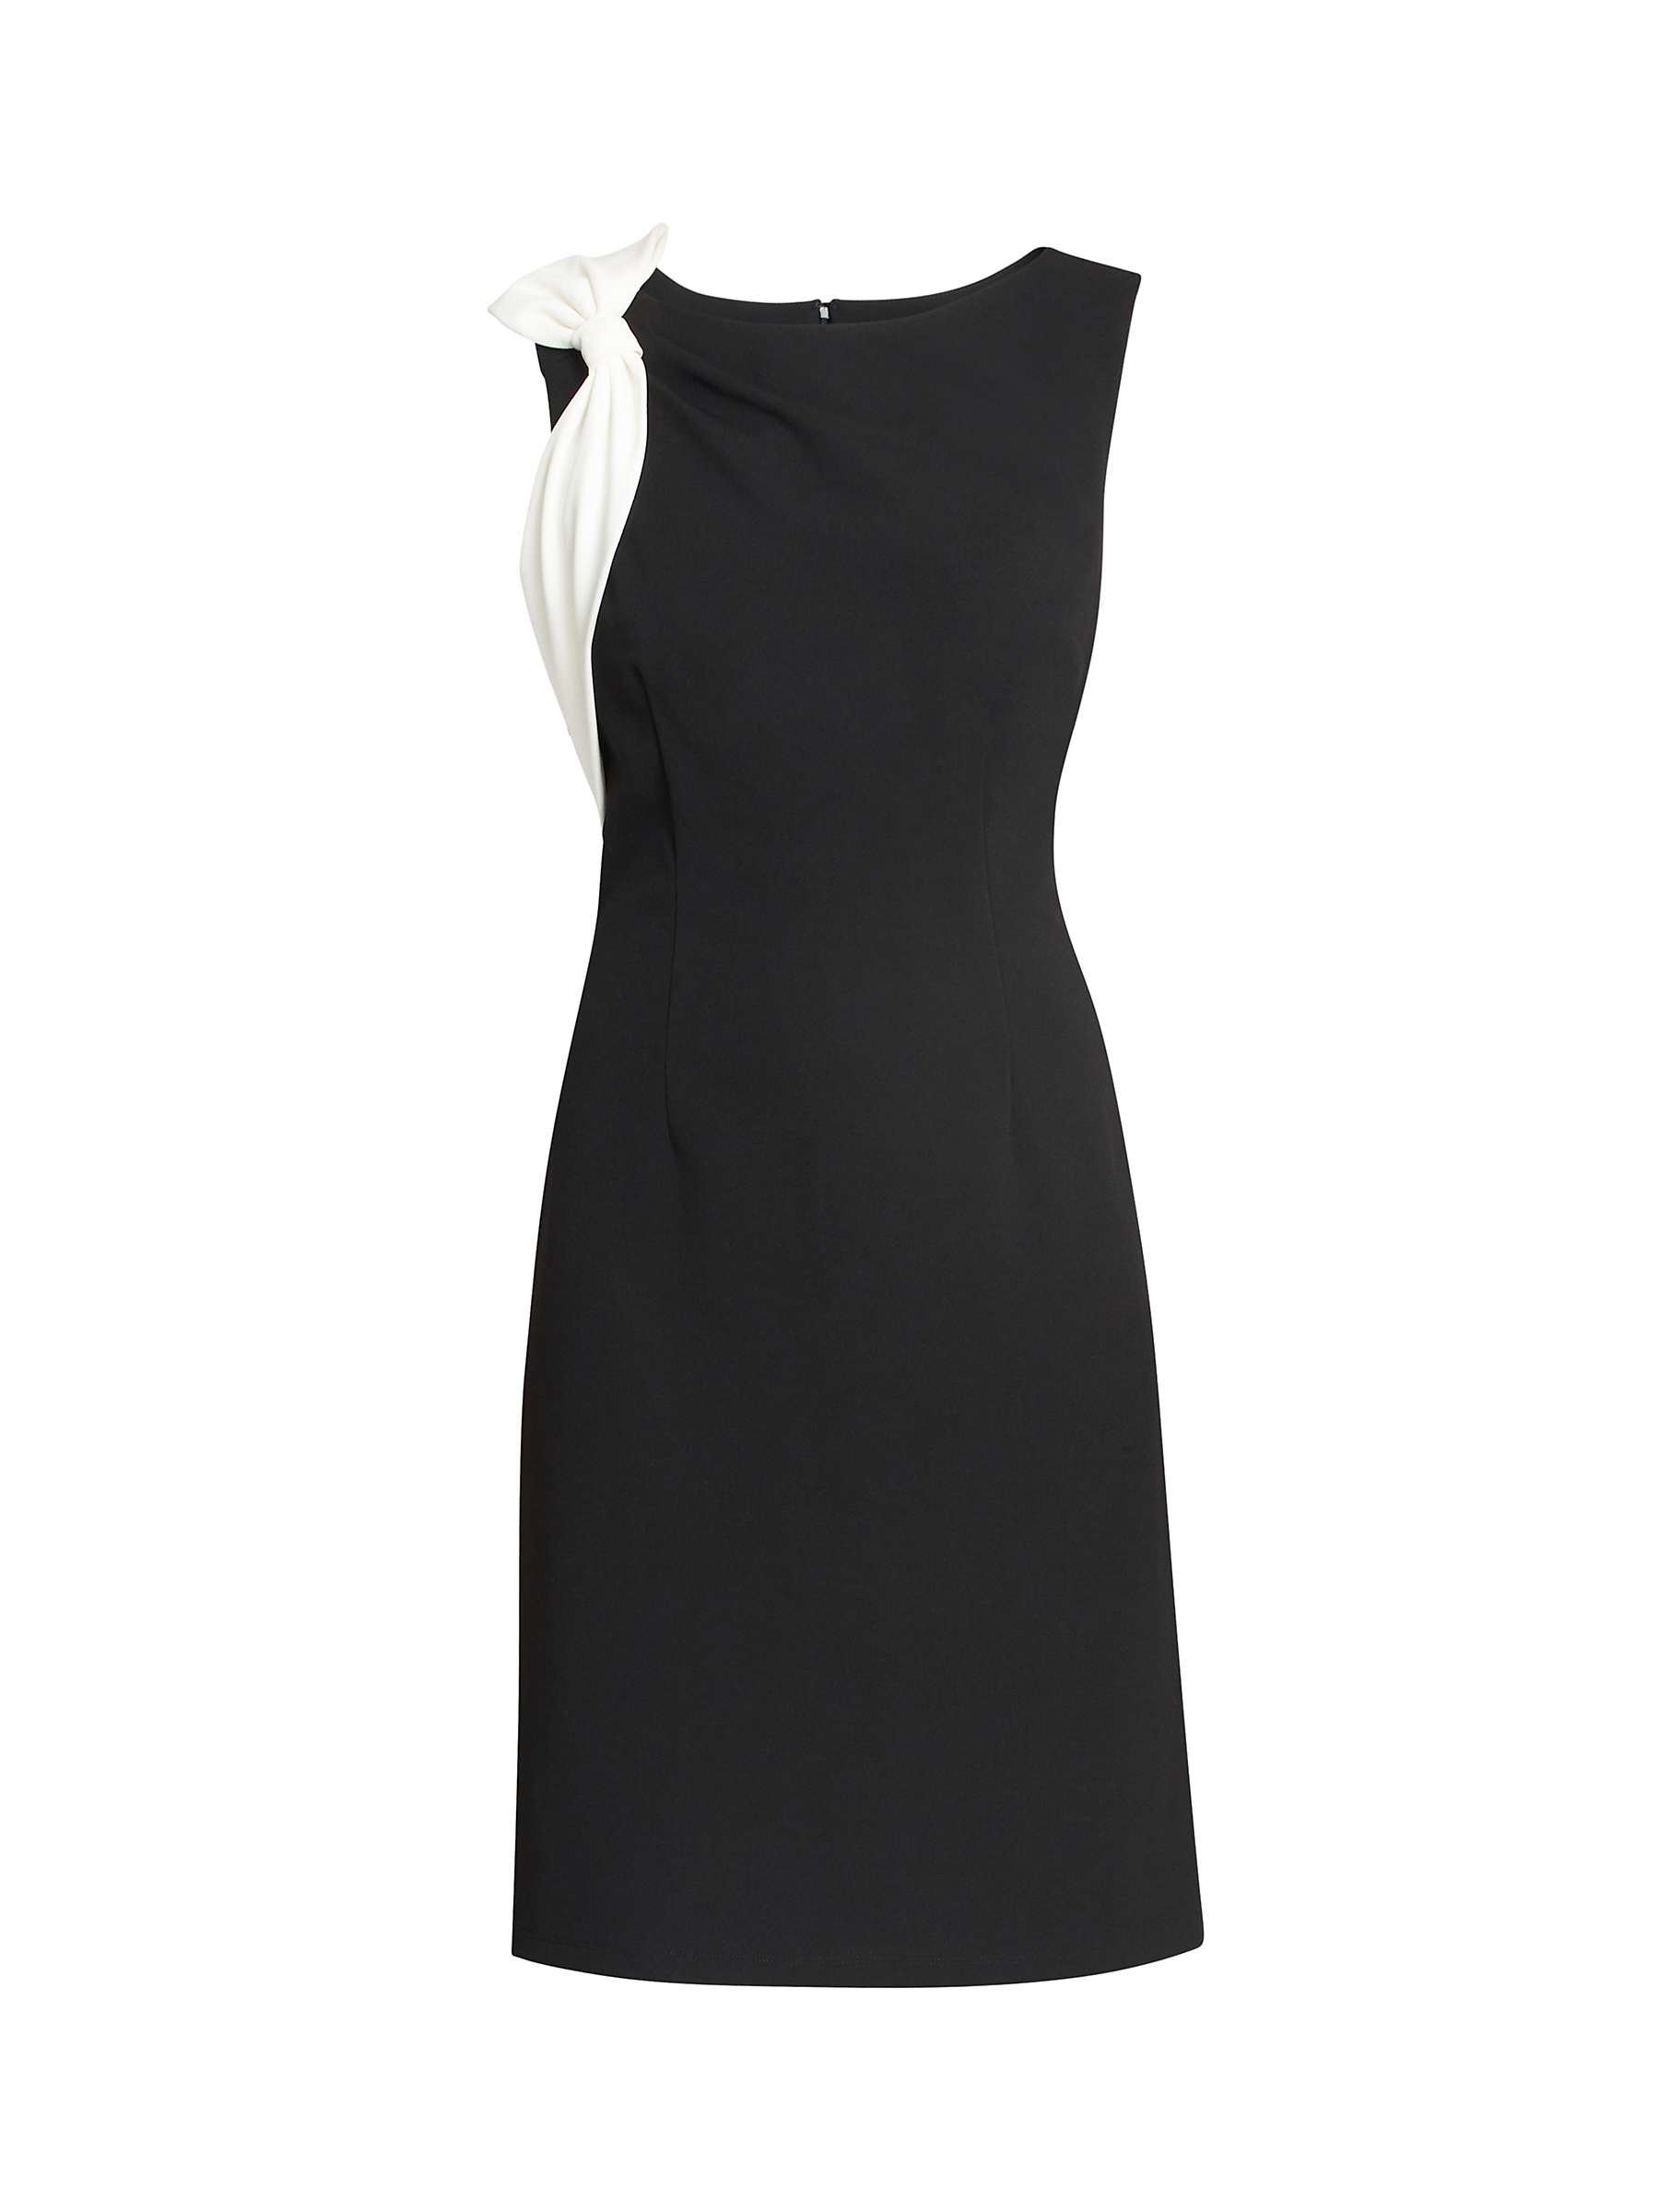 Buy Gina Bacconi Jaya Contrast Bow Shift Dress, Black/Ivory Online at johnlewis.com